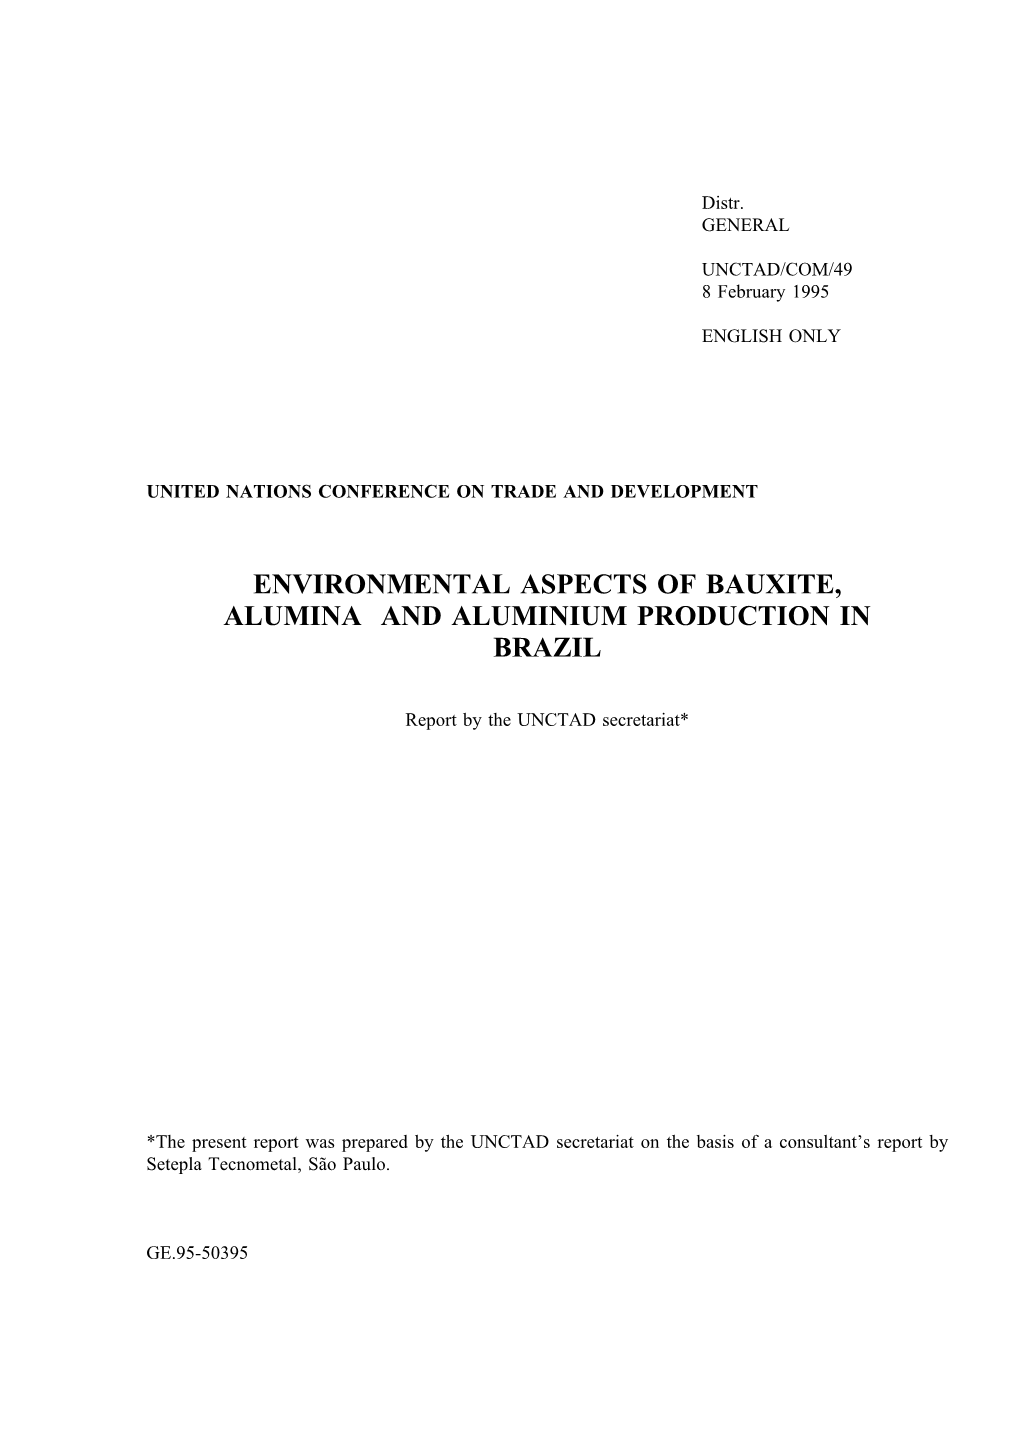 Environmental Aspects of Bauxite, Alumina and Aluminium Production in Brazil